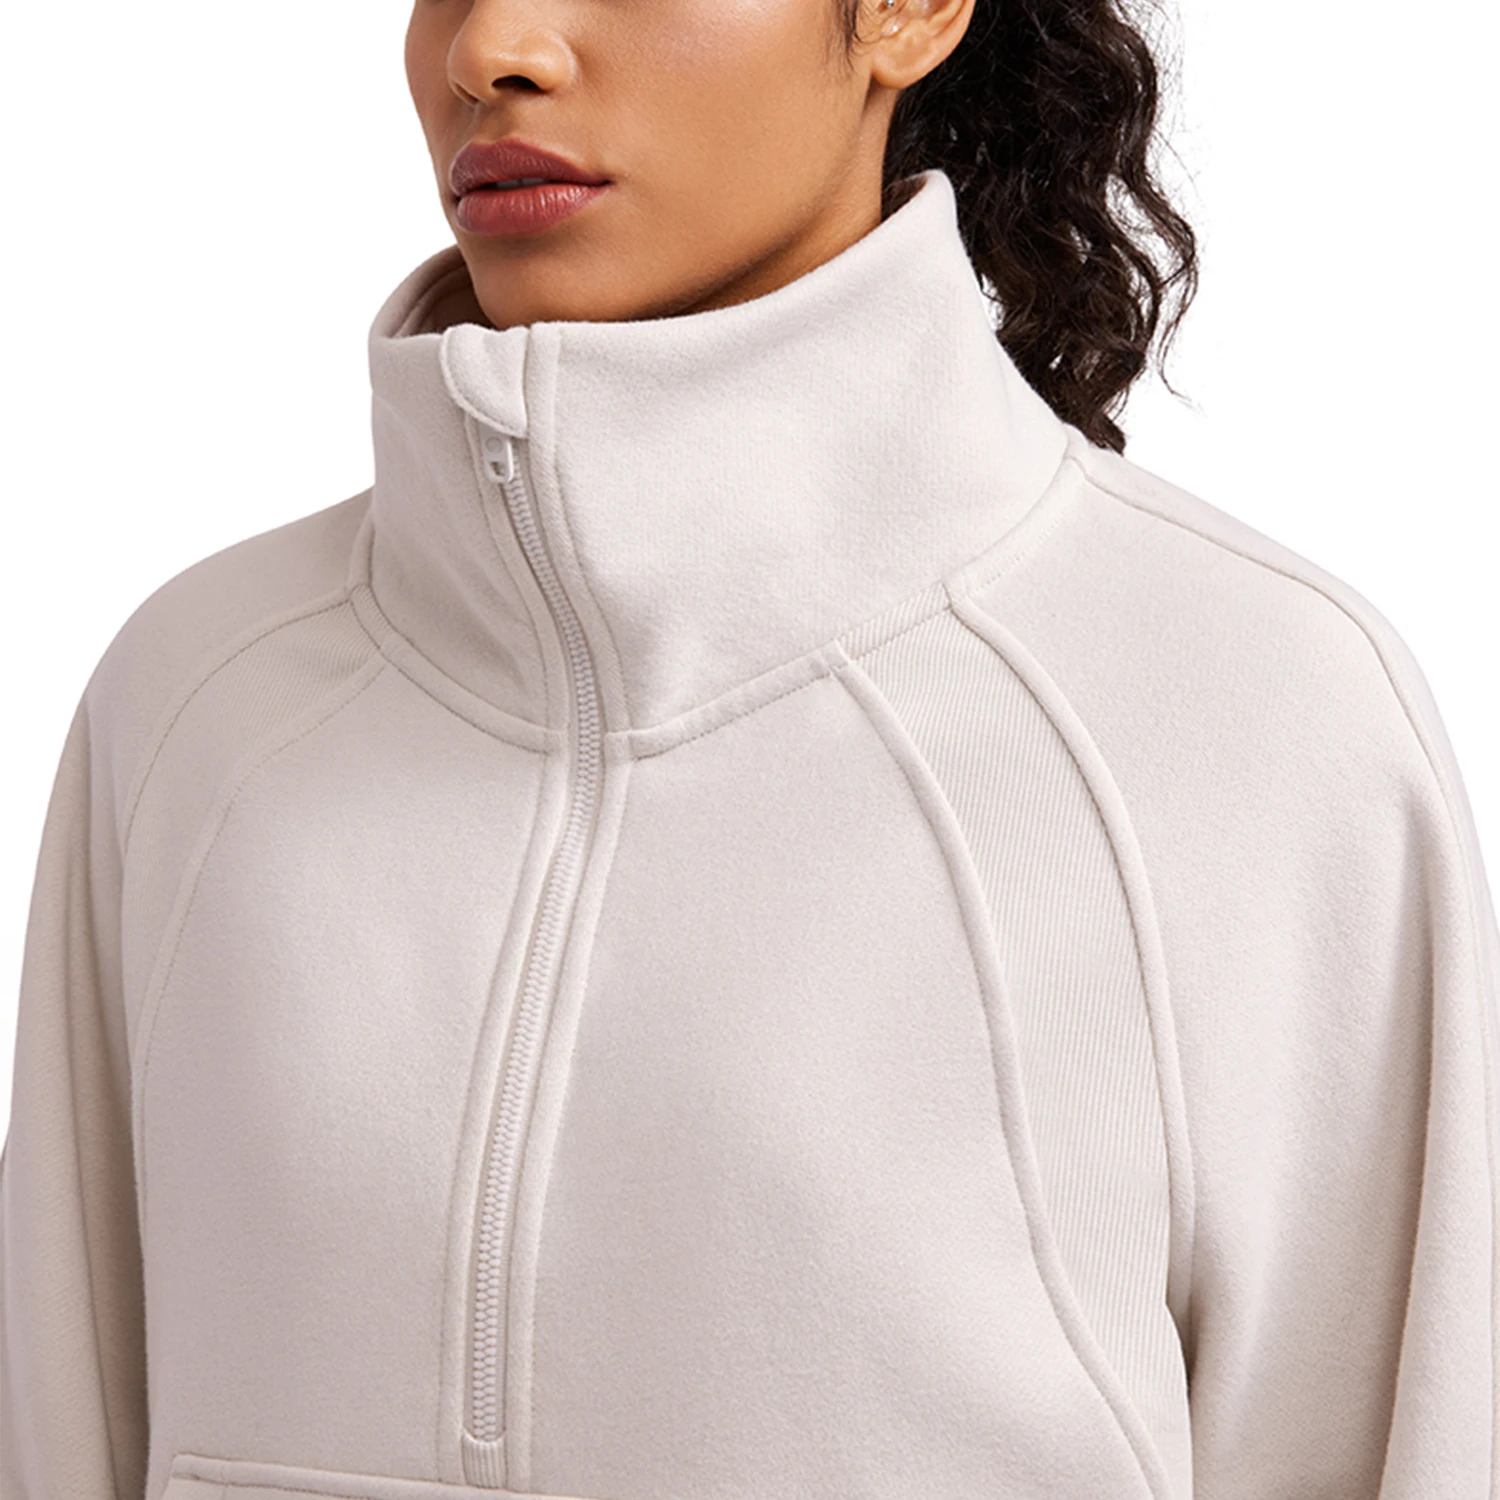 CRZ YOGA Womens Fleece Lined Half Zipper Sweatshirts Funnel Neck